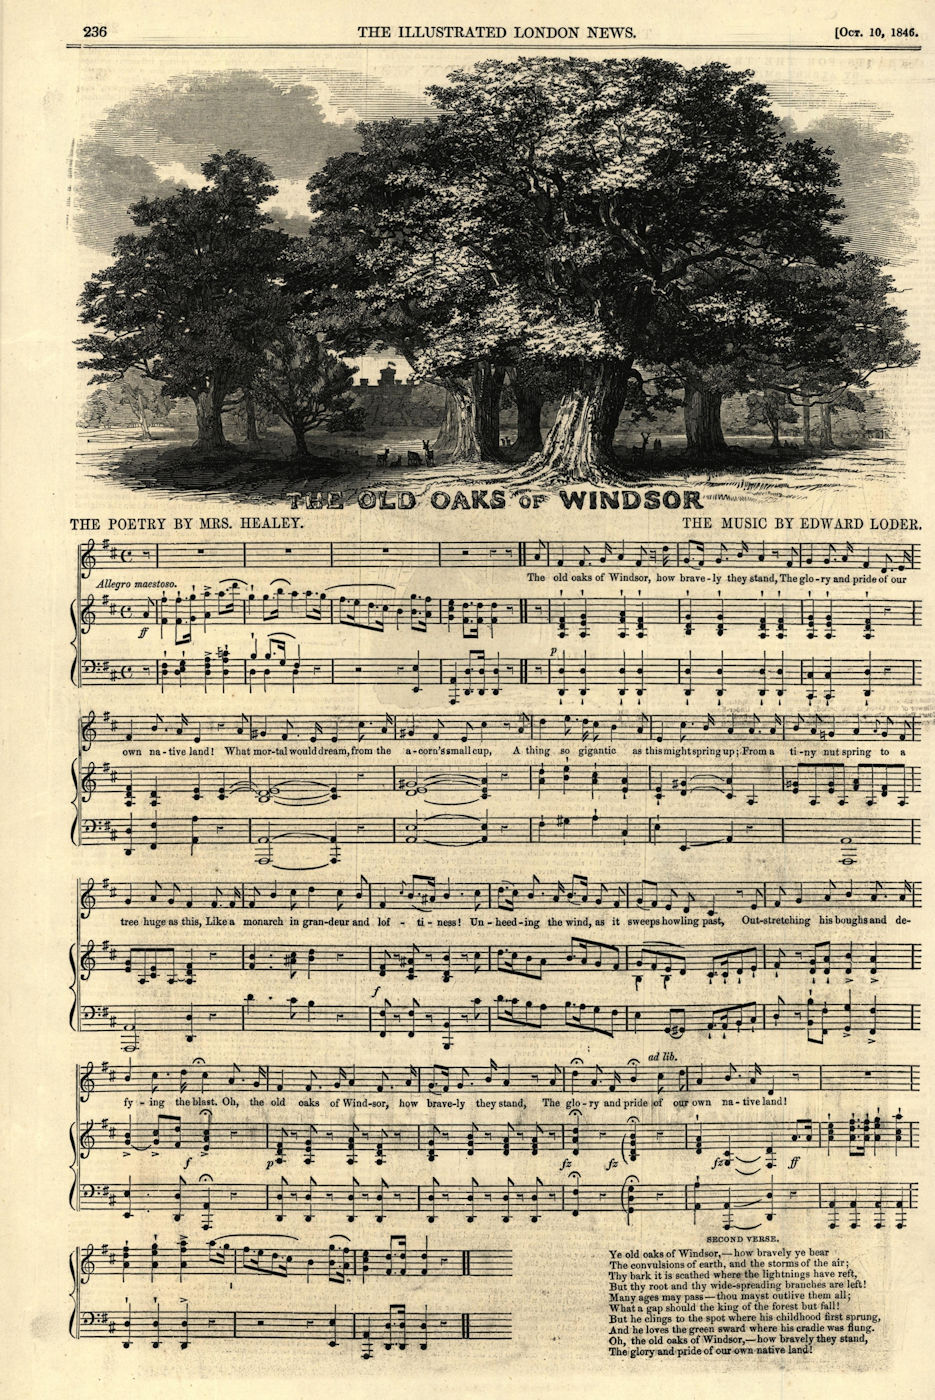 The Old Oaks of Windsor. Sheet music. Healey. Edward Loder 1846 print